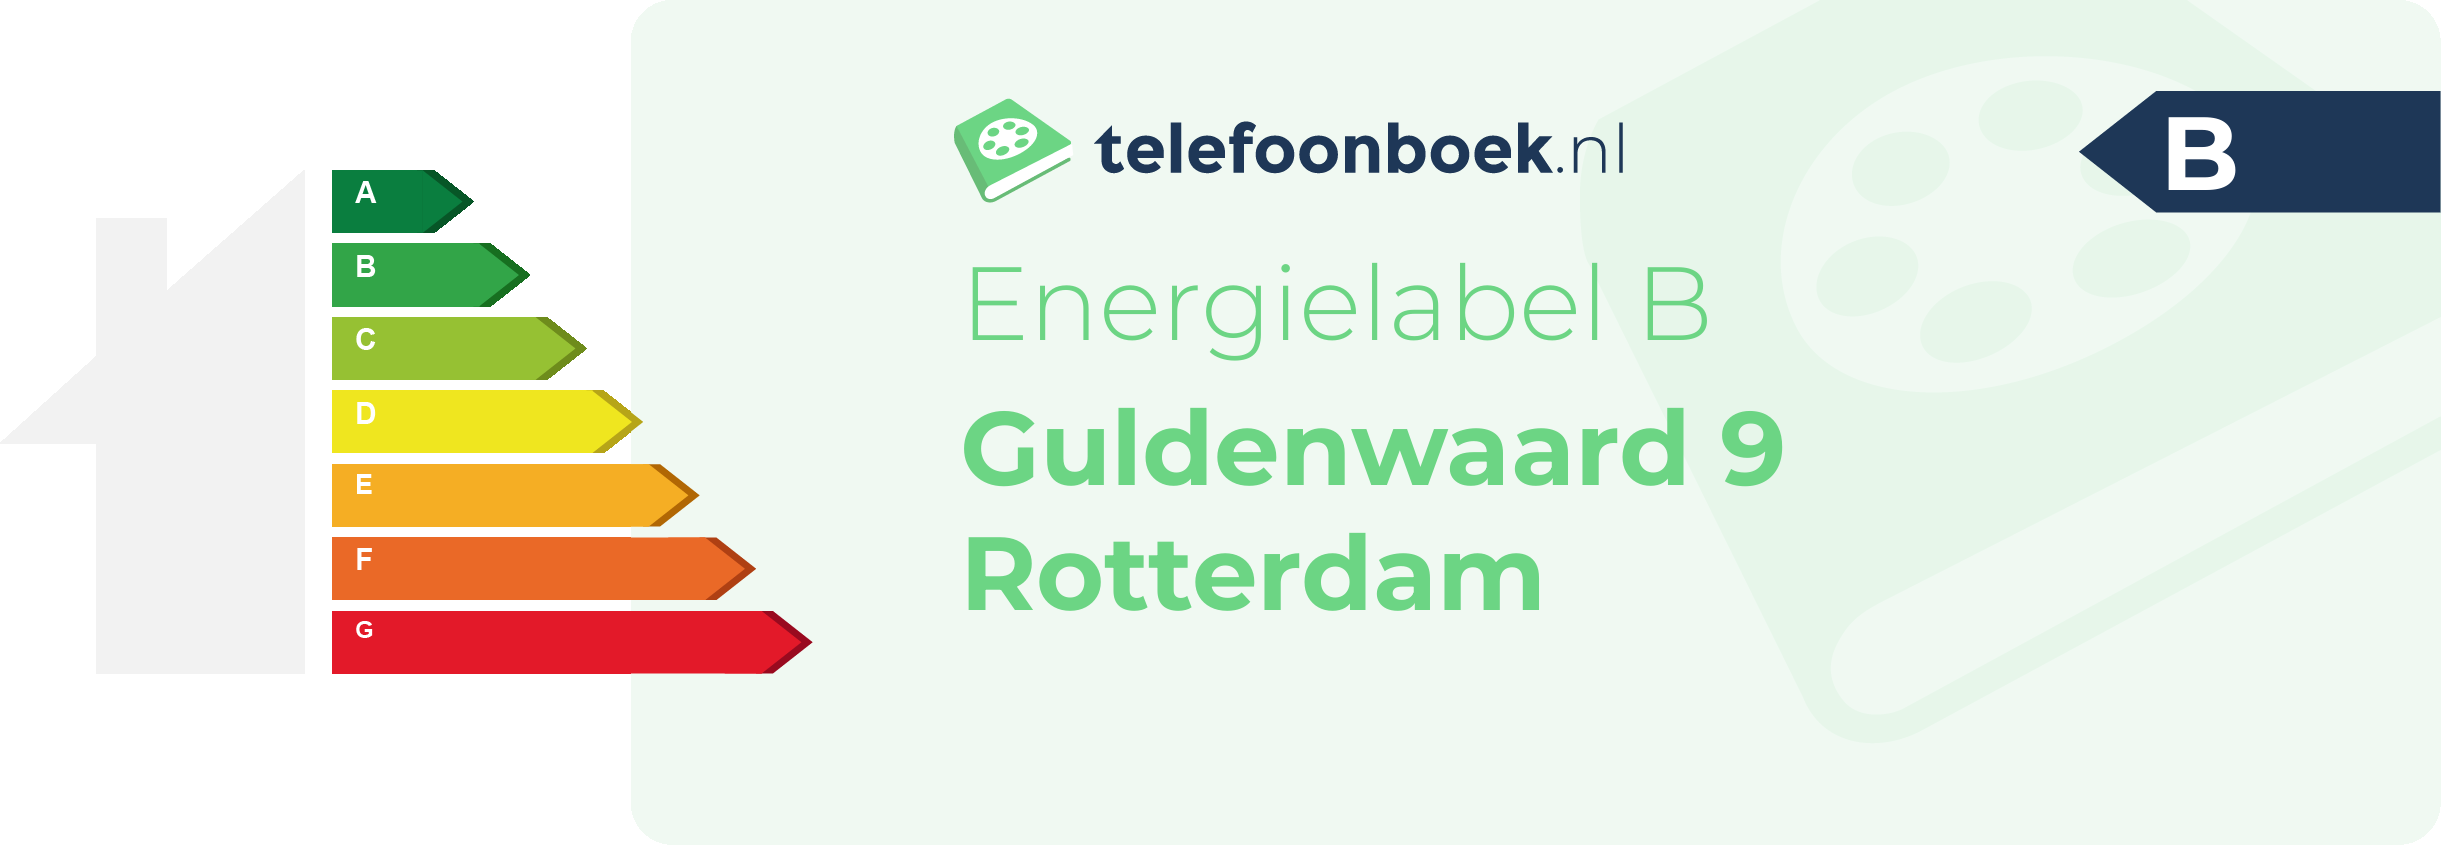 Energielabel Guldenwaard 9 Rotterdam